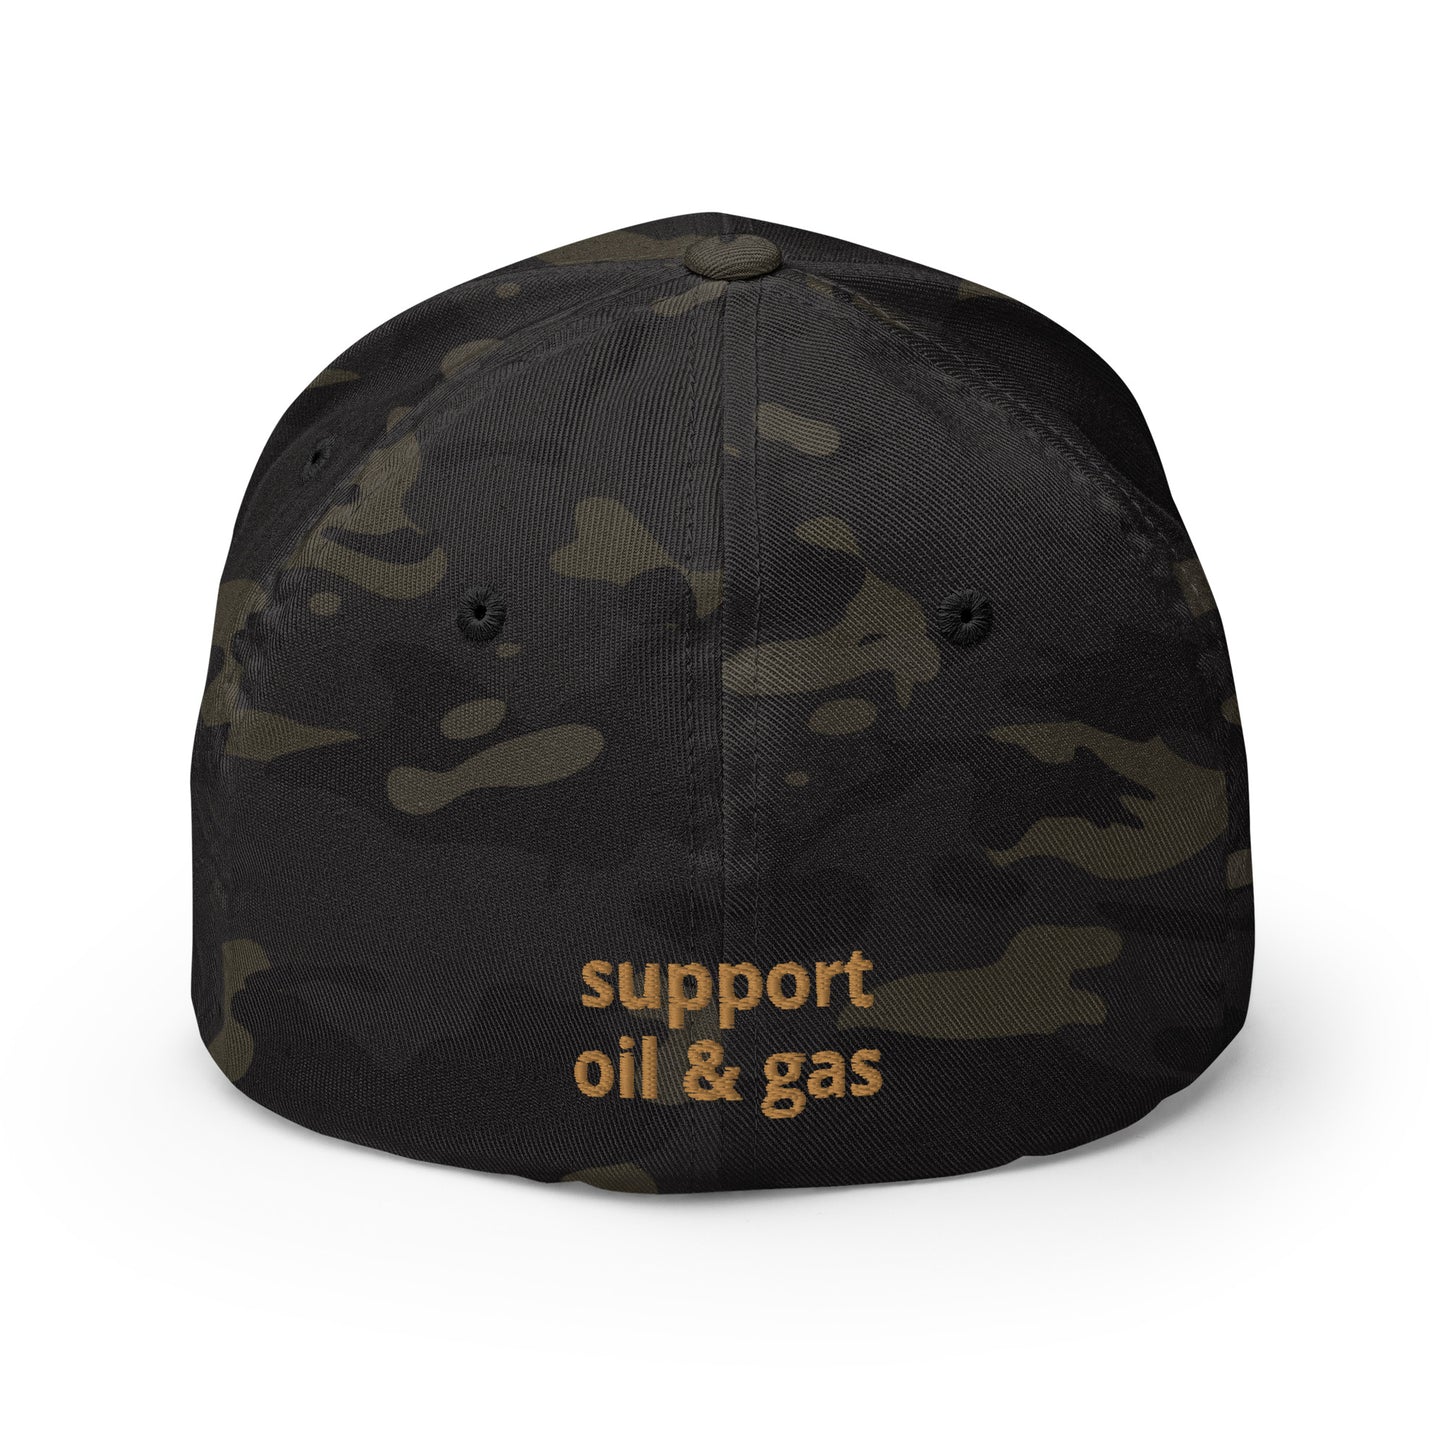 drillbitz digz / support oil & gas flexfit Structured Twill Cap